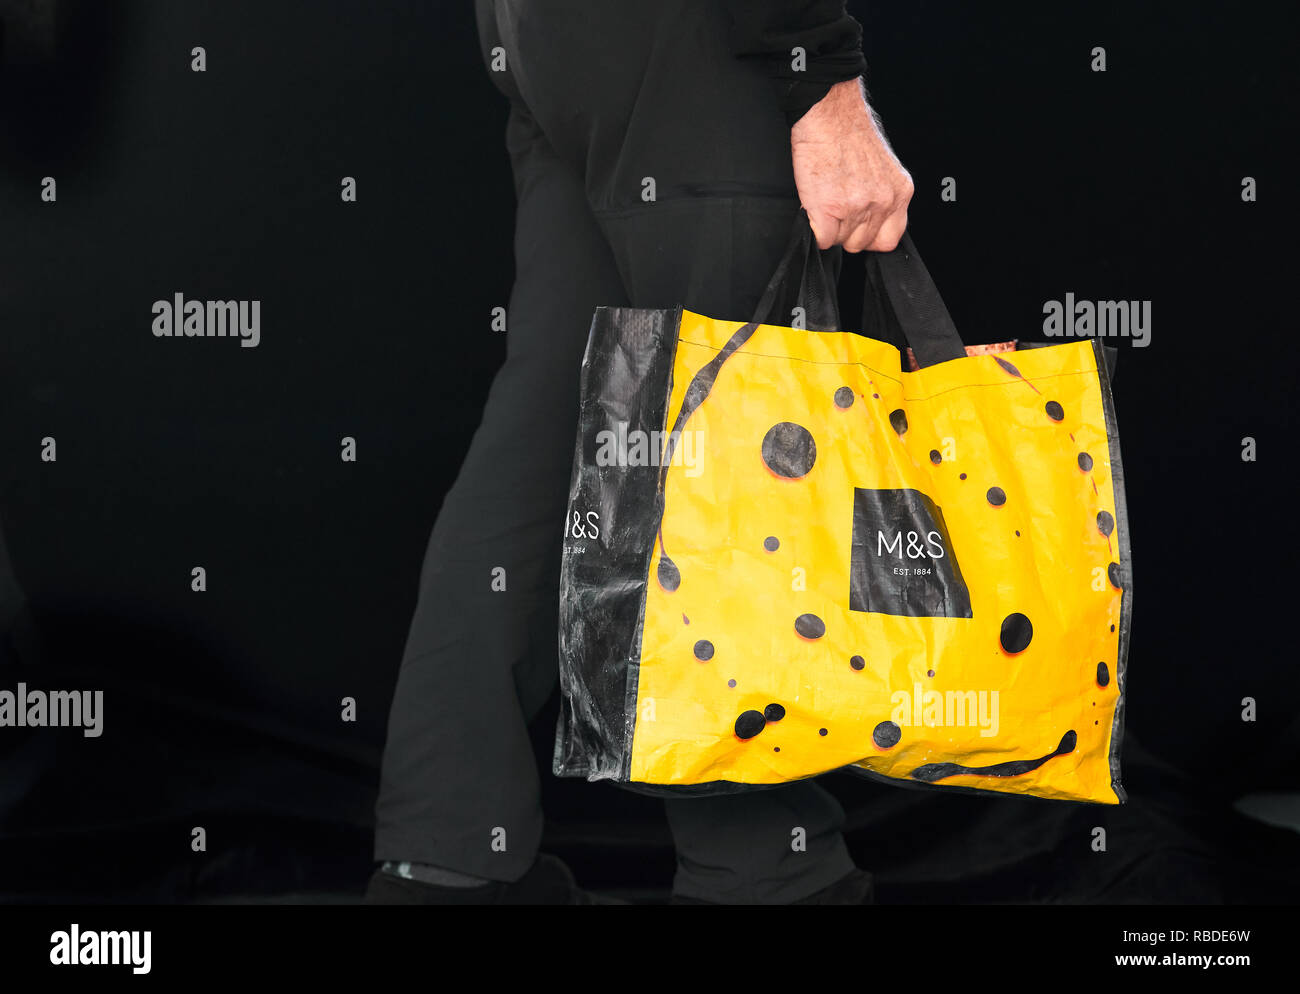 El hombre lleva una bolsa de compras reutilizable con comestibles después de salir de un M&S (Marks & Spencer) store. Foto de stock